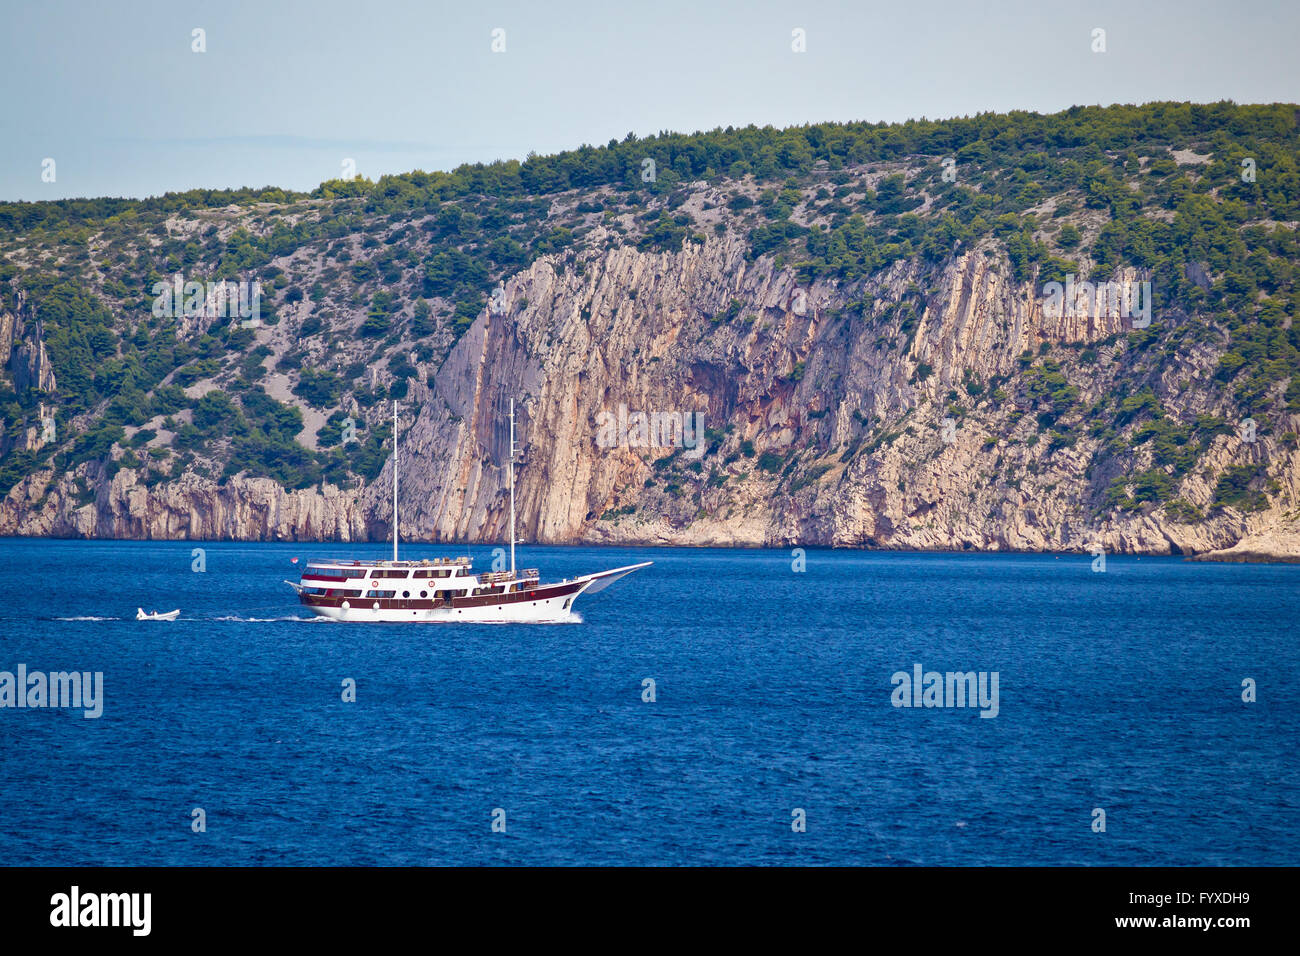 Island of Solta cliffs boat cruising Stock Photo